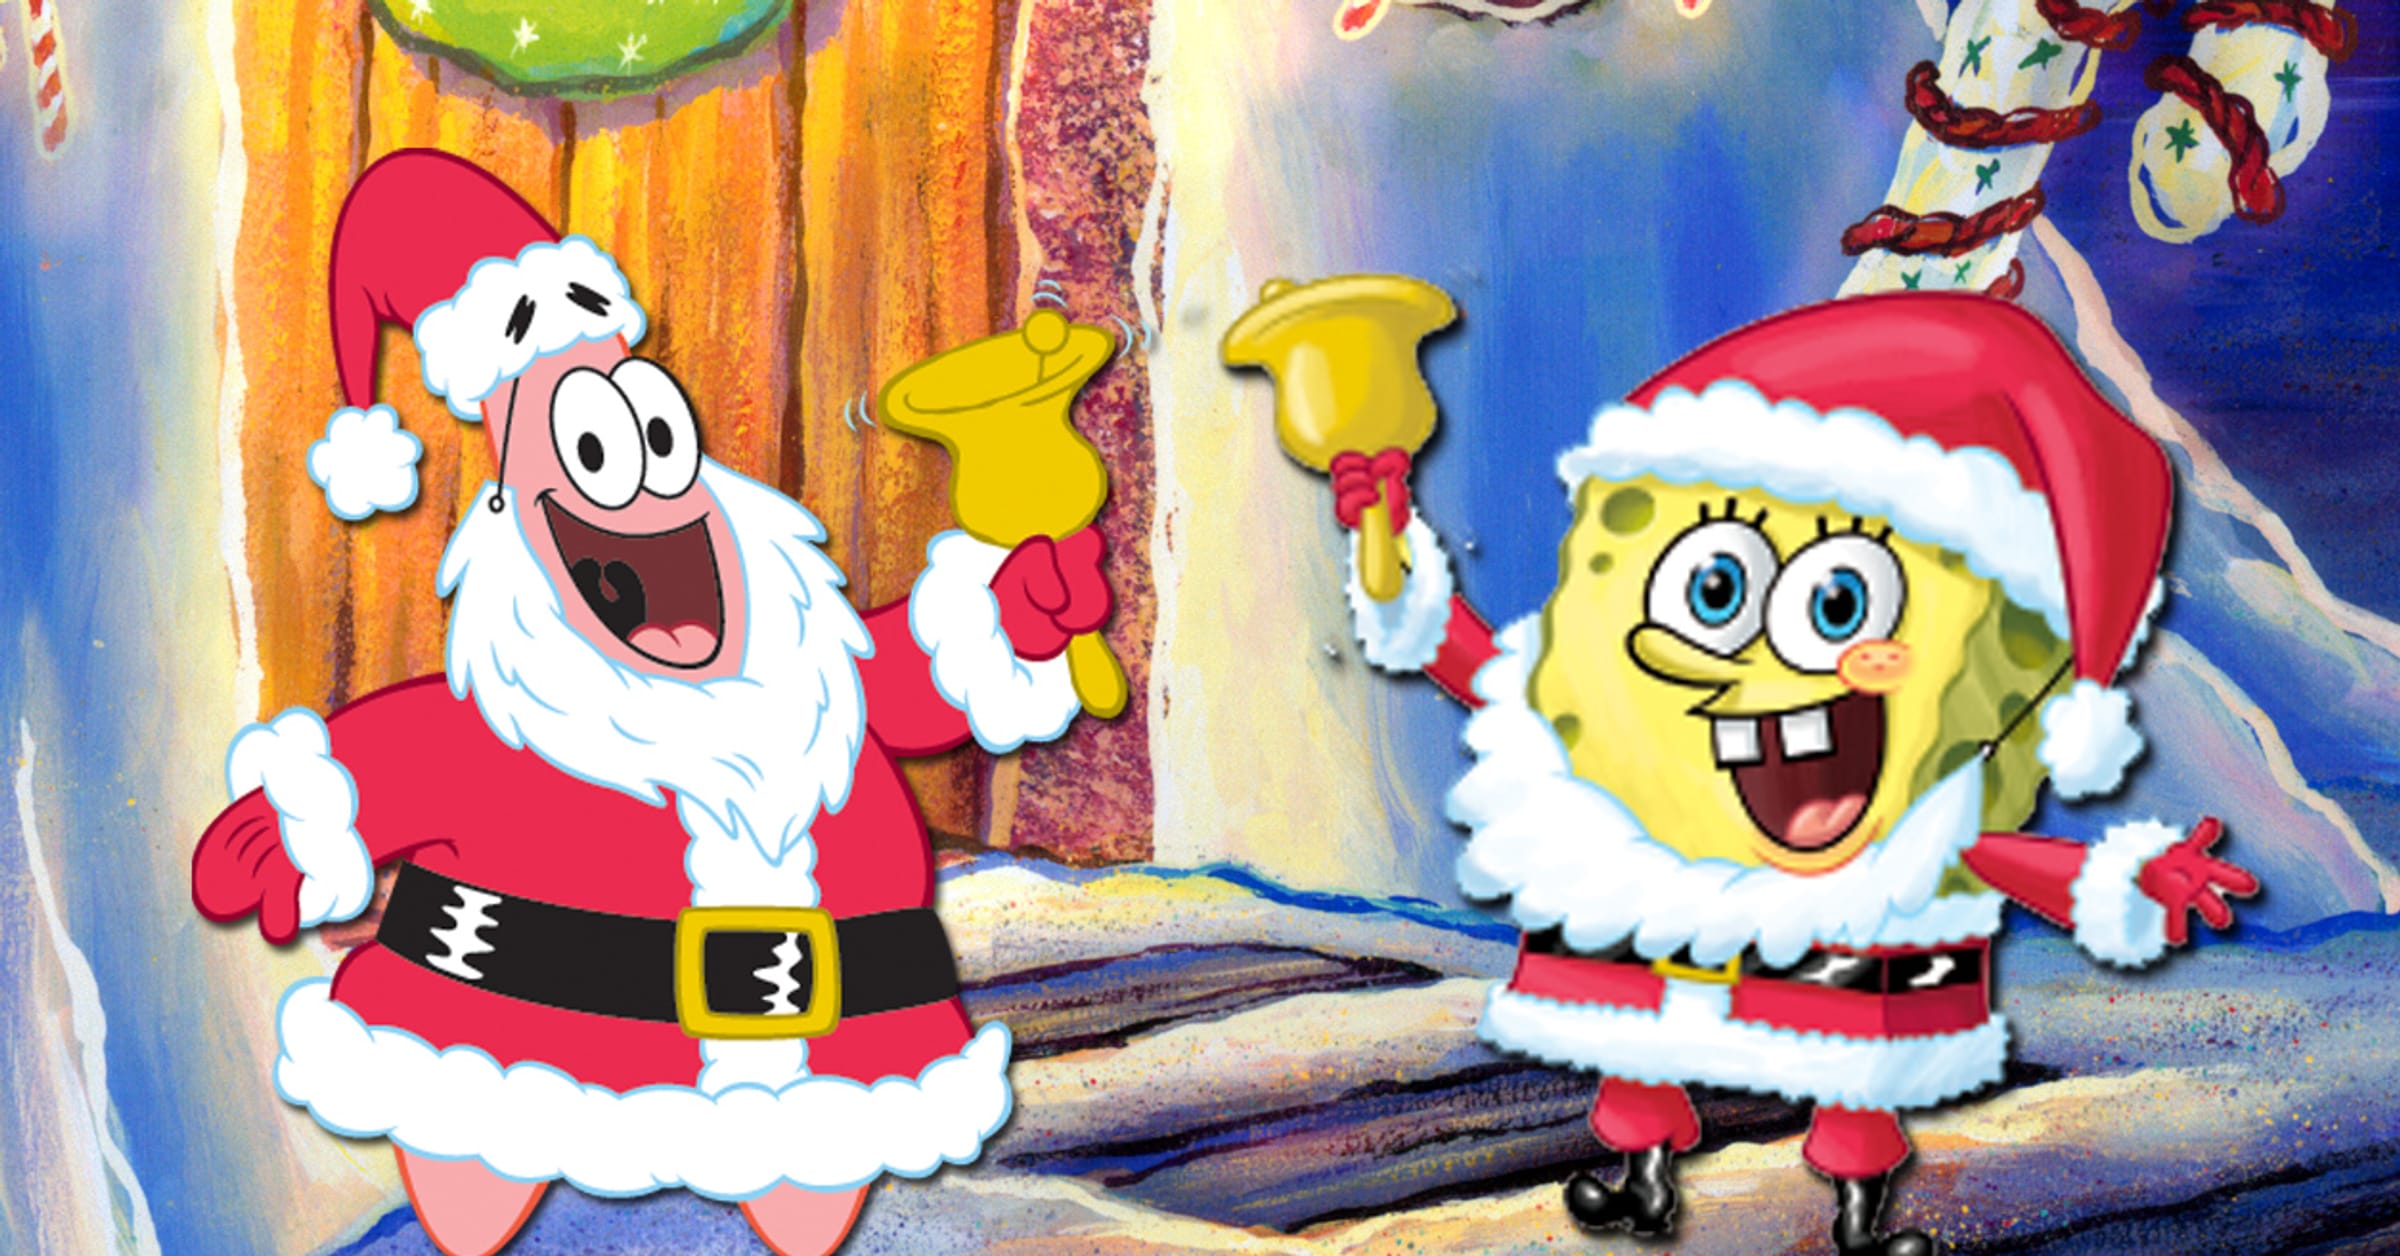 The 25 Very Best Episodes of SpongeBob SquarePants